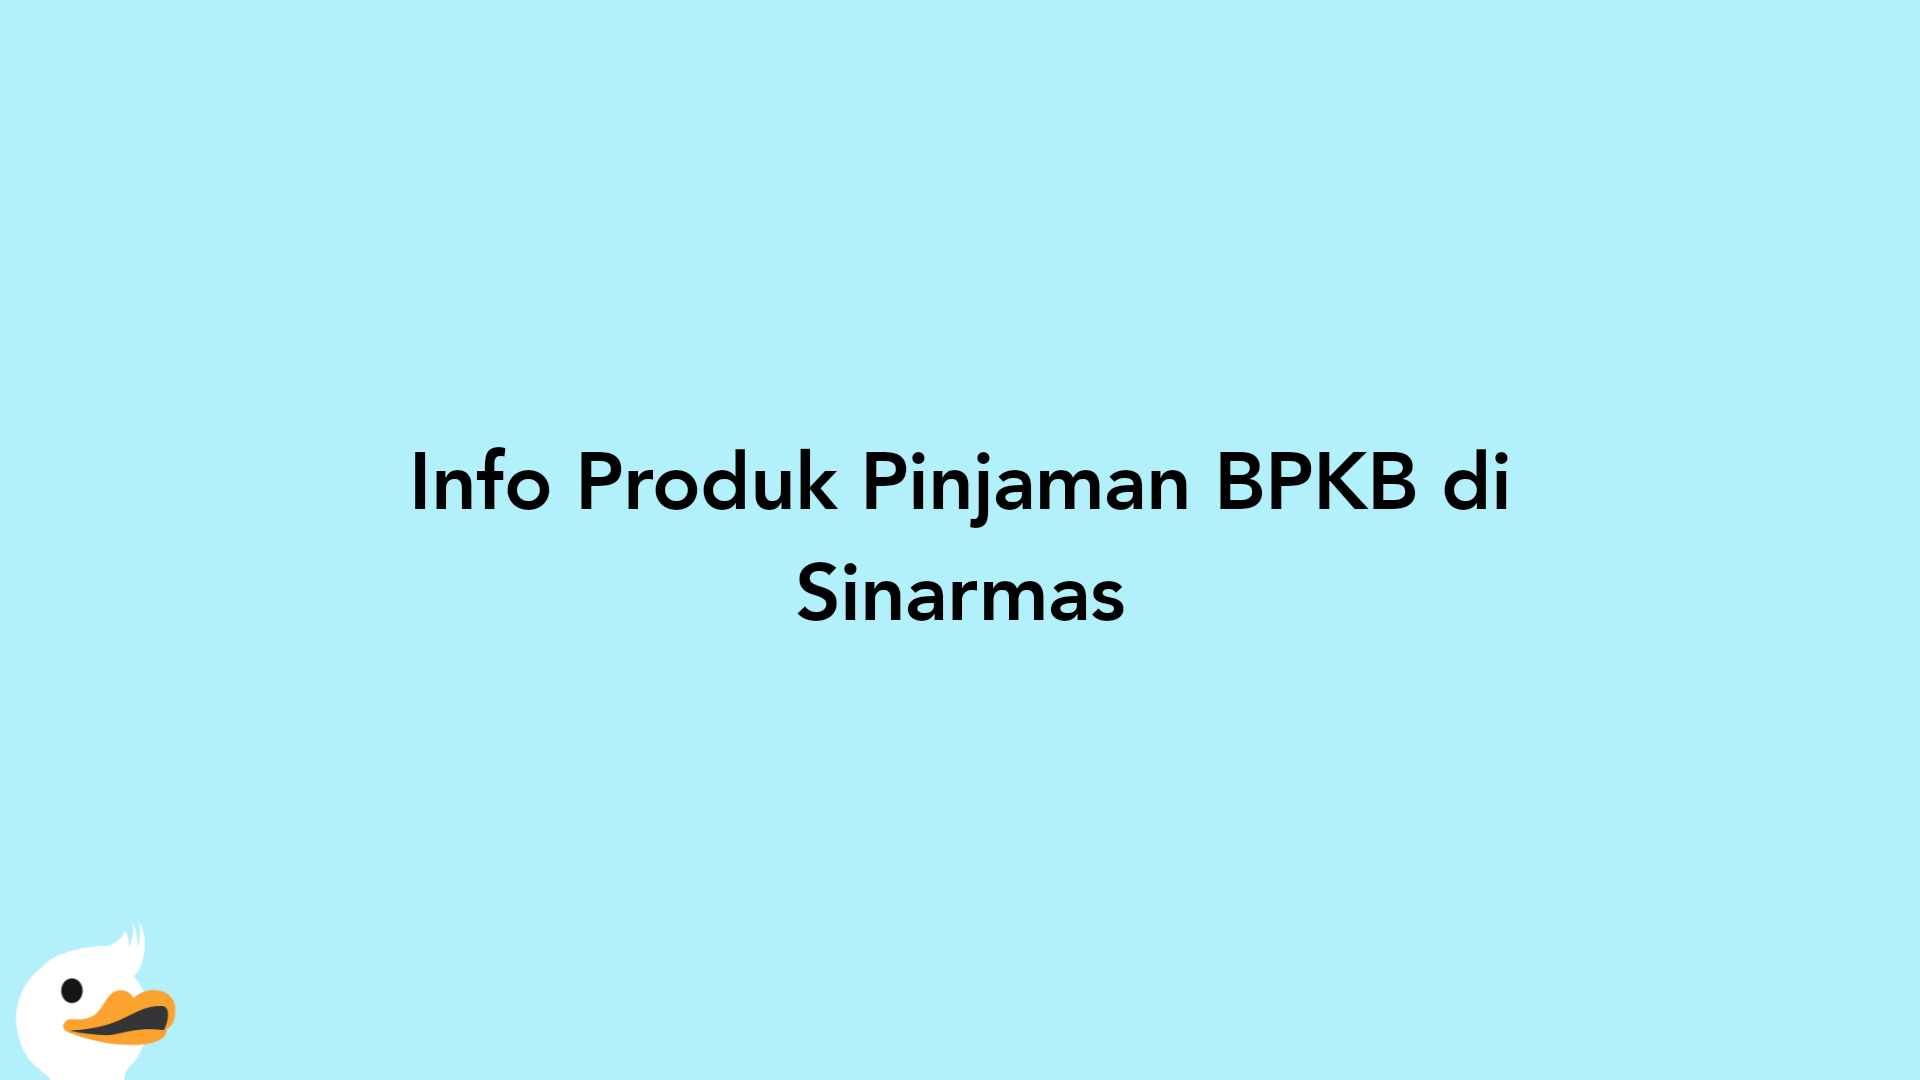 Info Produk Pinjaman BPKB di Sinarmas